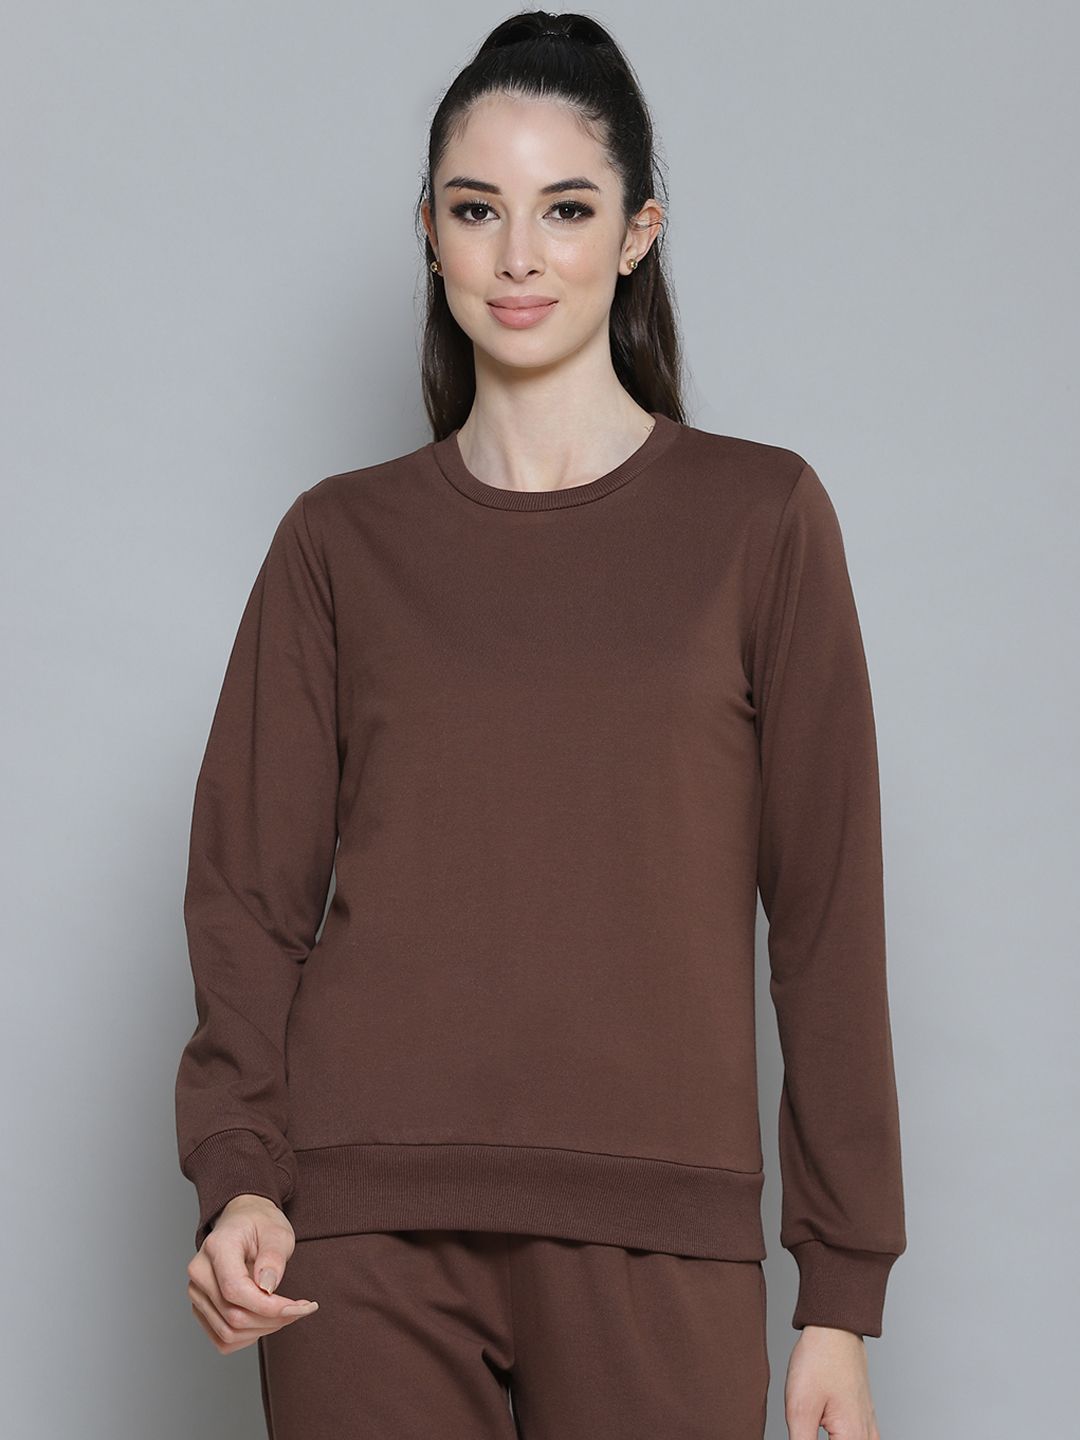 Femella Women Brown Sweatshirt Price in India